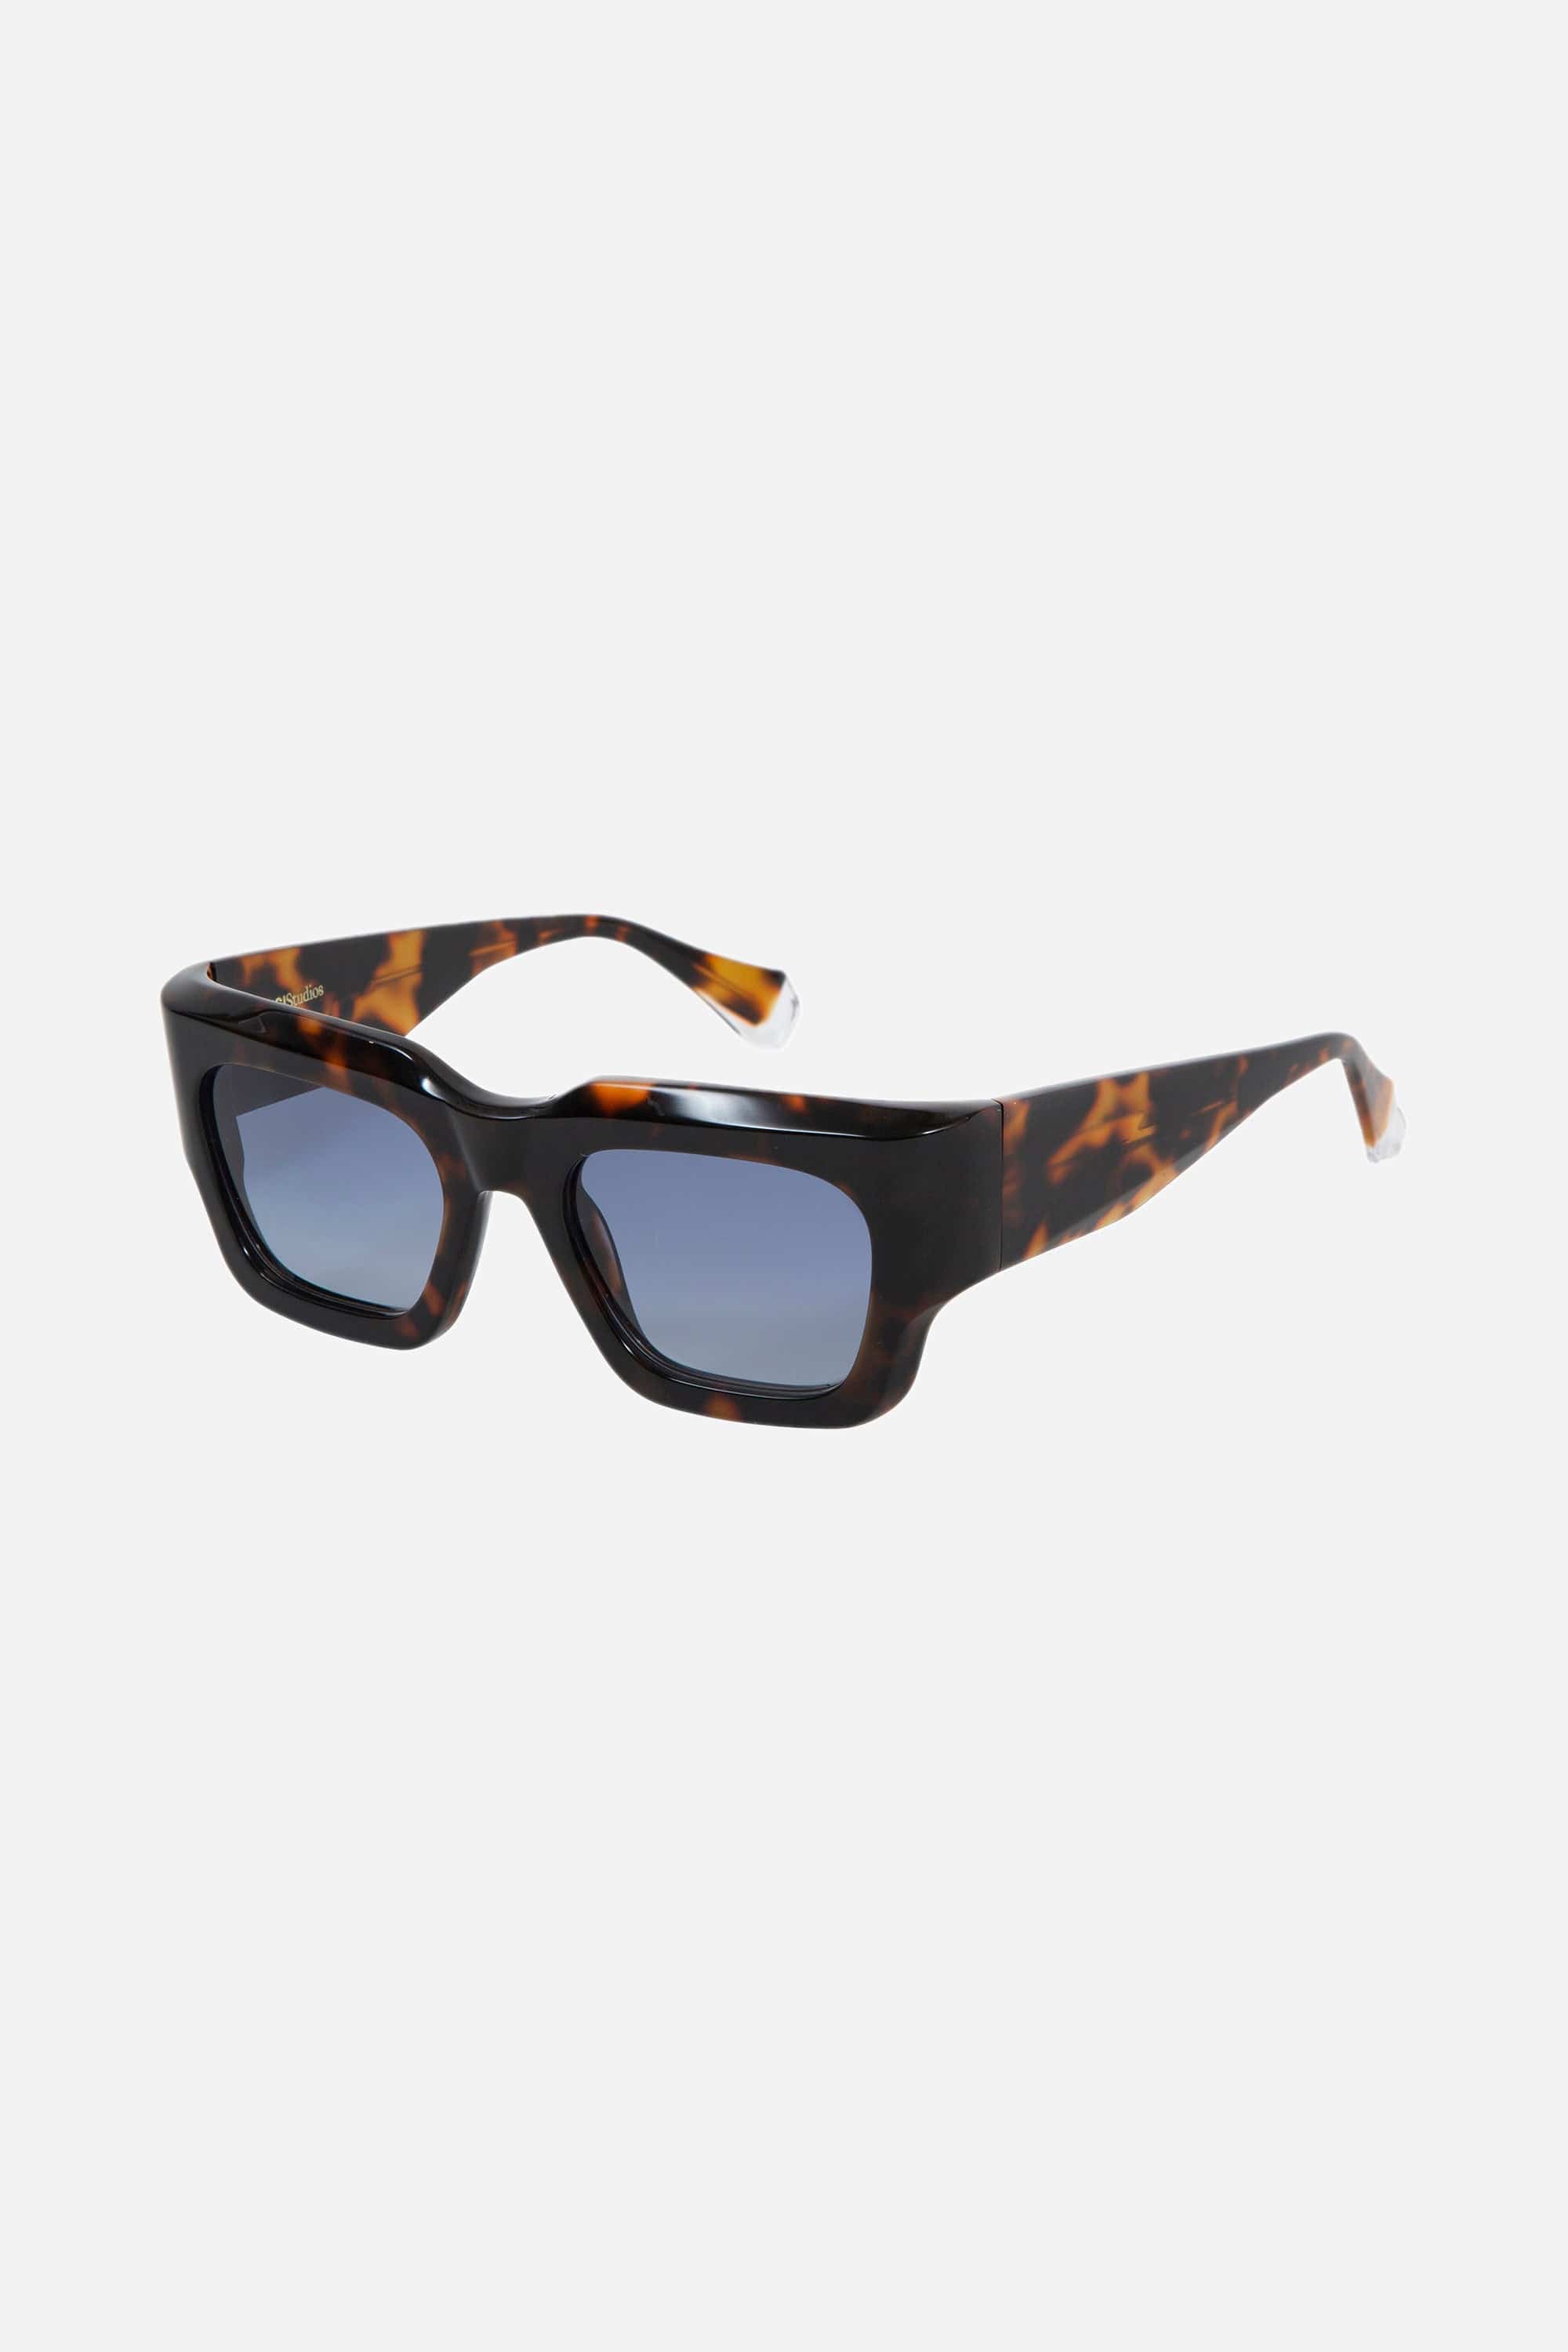 Gigi Studios havana squared bold sunglasses - Eyewear Club